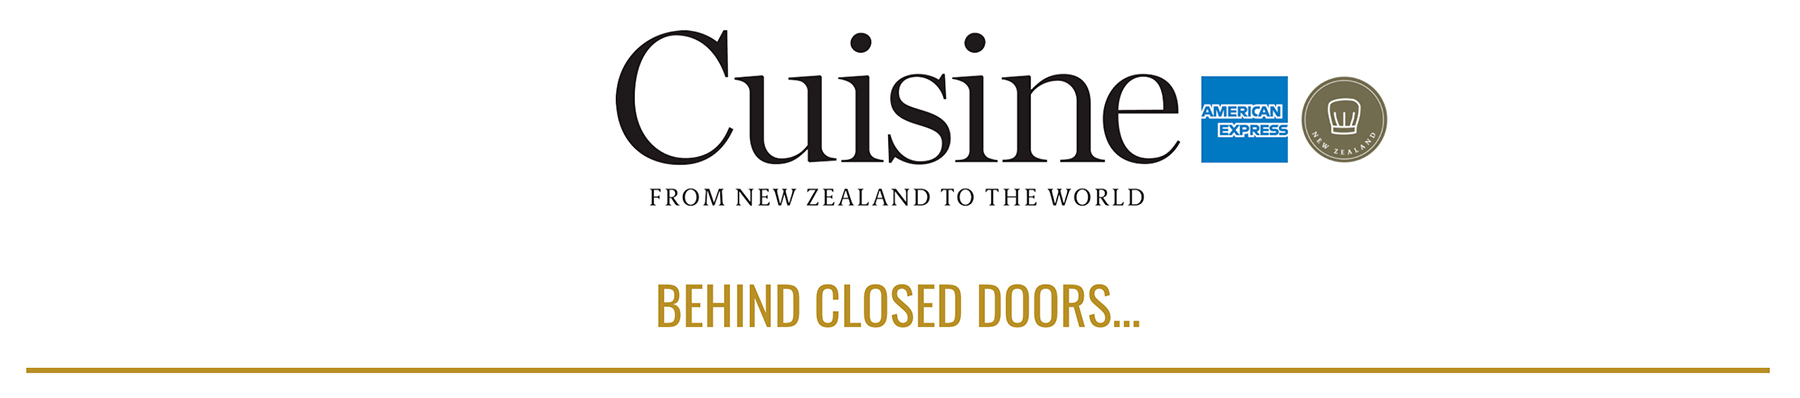 Behind Closed Doors・Cuisine Magazine・Lifestyle & Portrait Photography